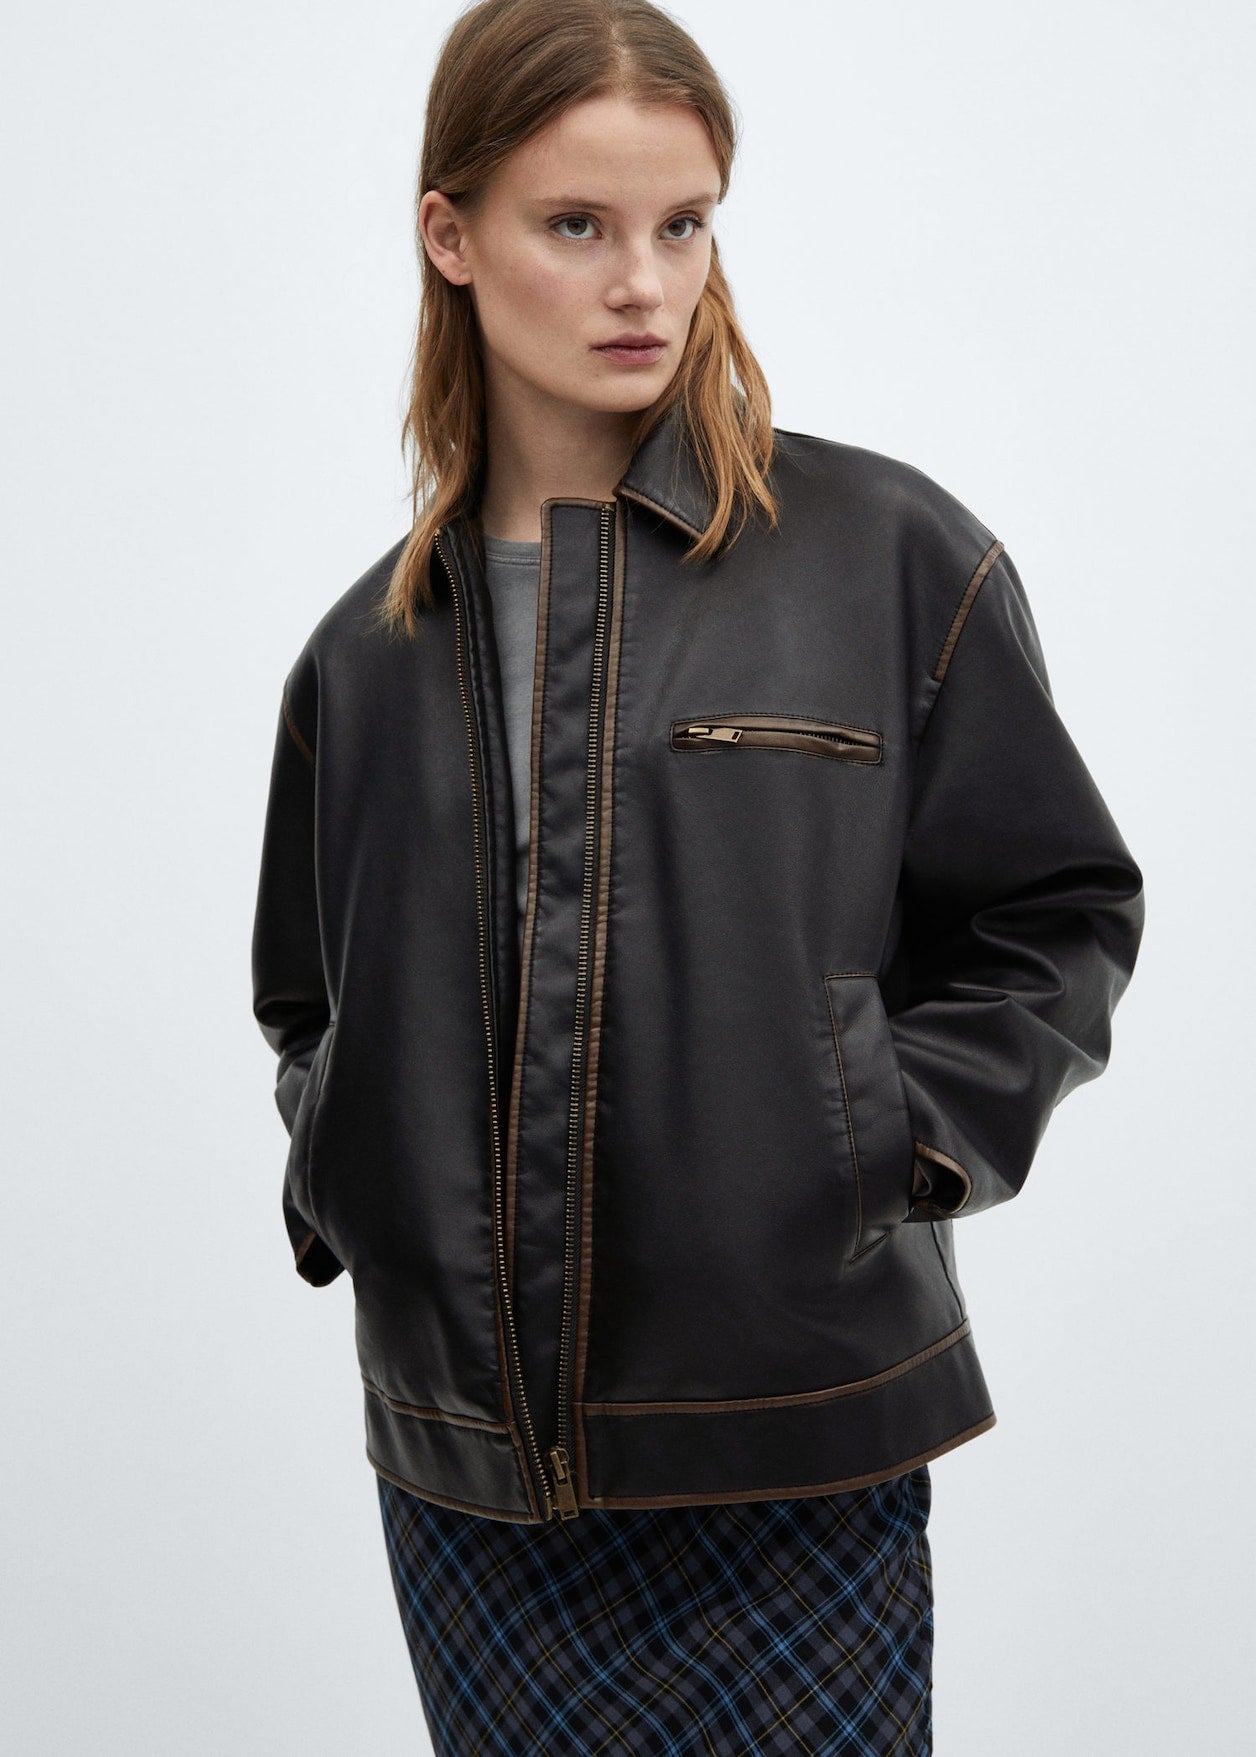 Worn leather effect jacket